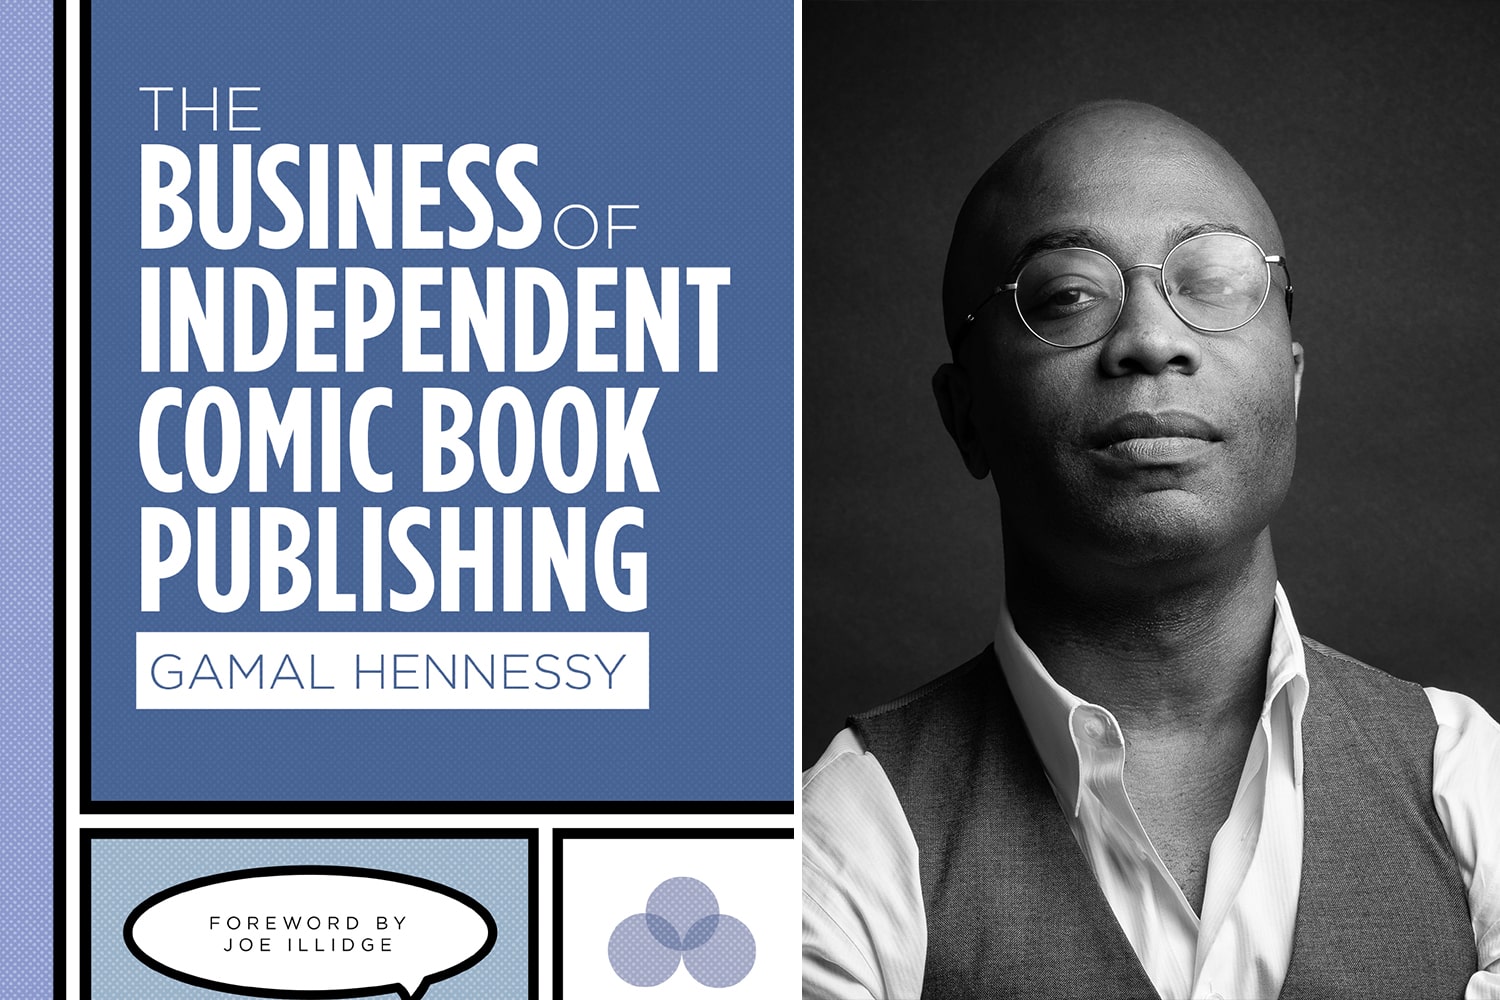 Kickstarter Alert: The Business of Independent Comic Book Publishing